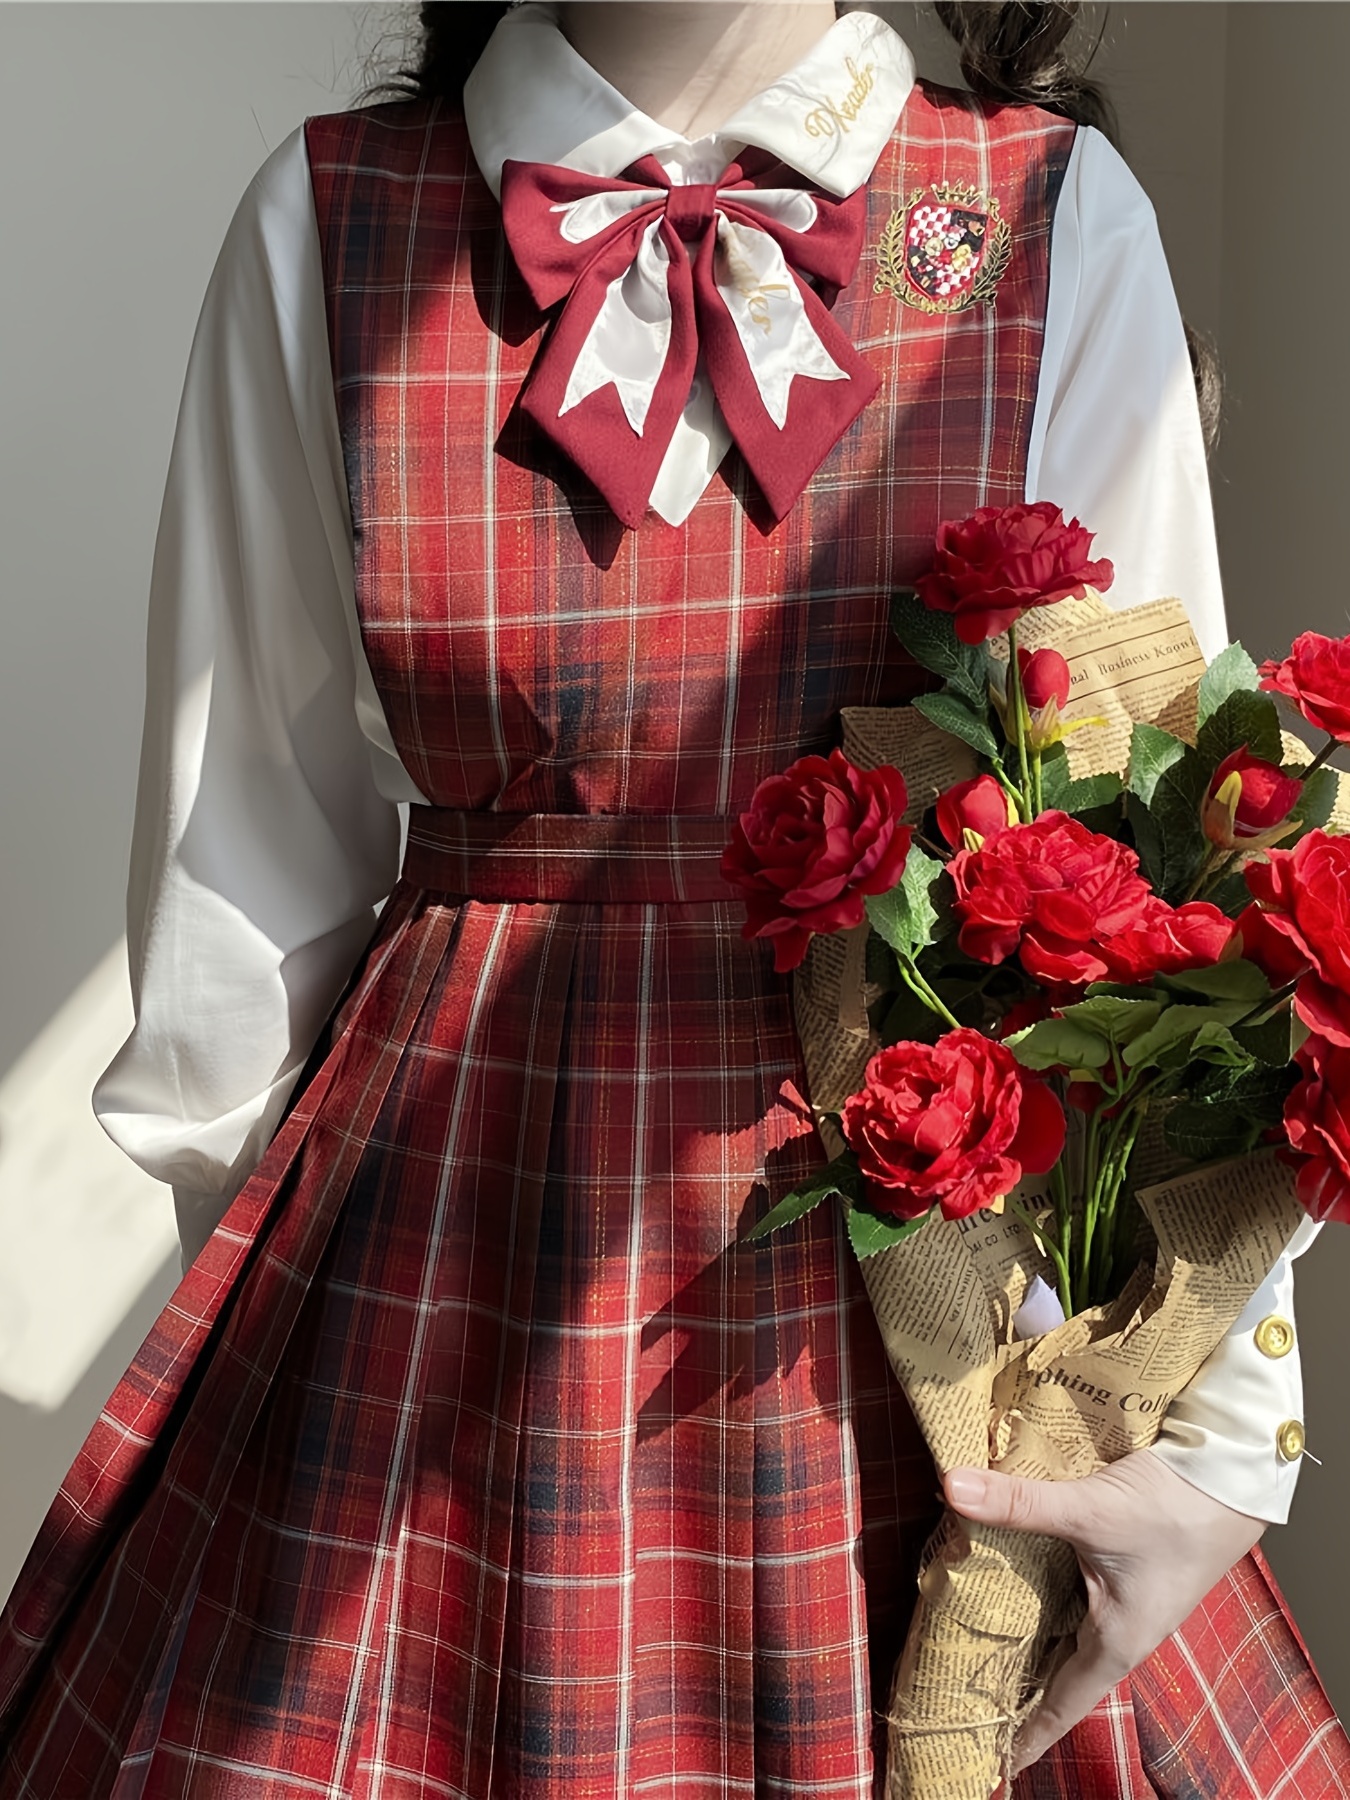 Premium Vector | Anime manggirl schoolgirl in red skirt